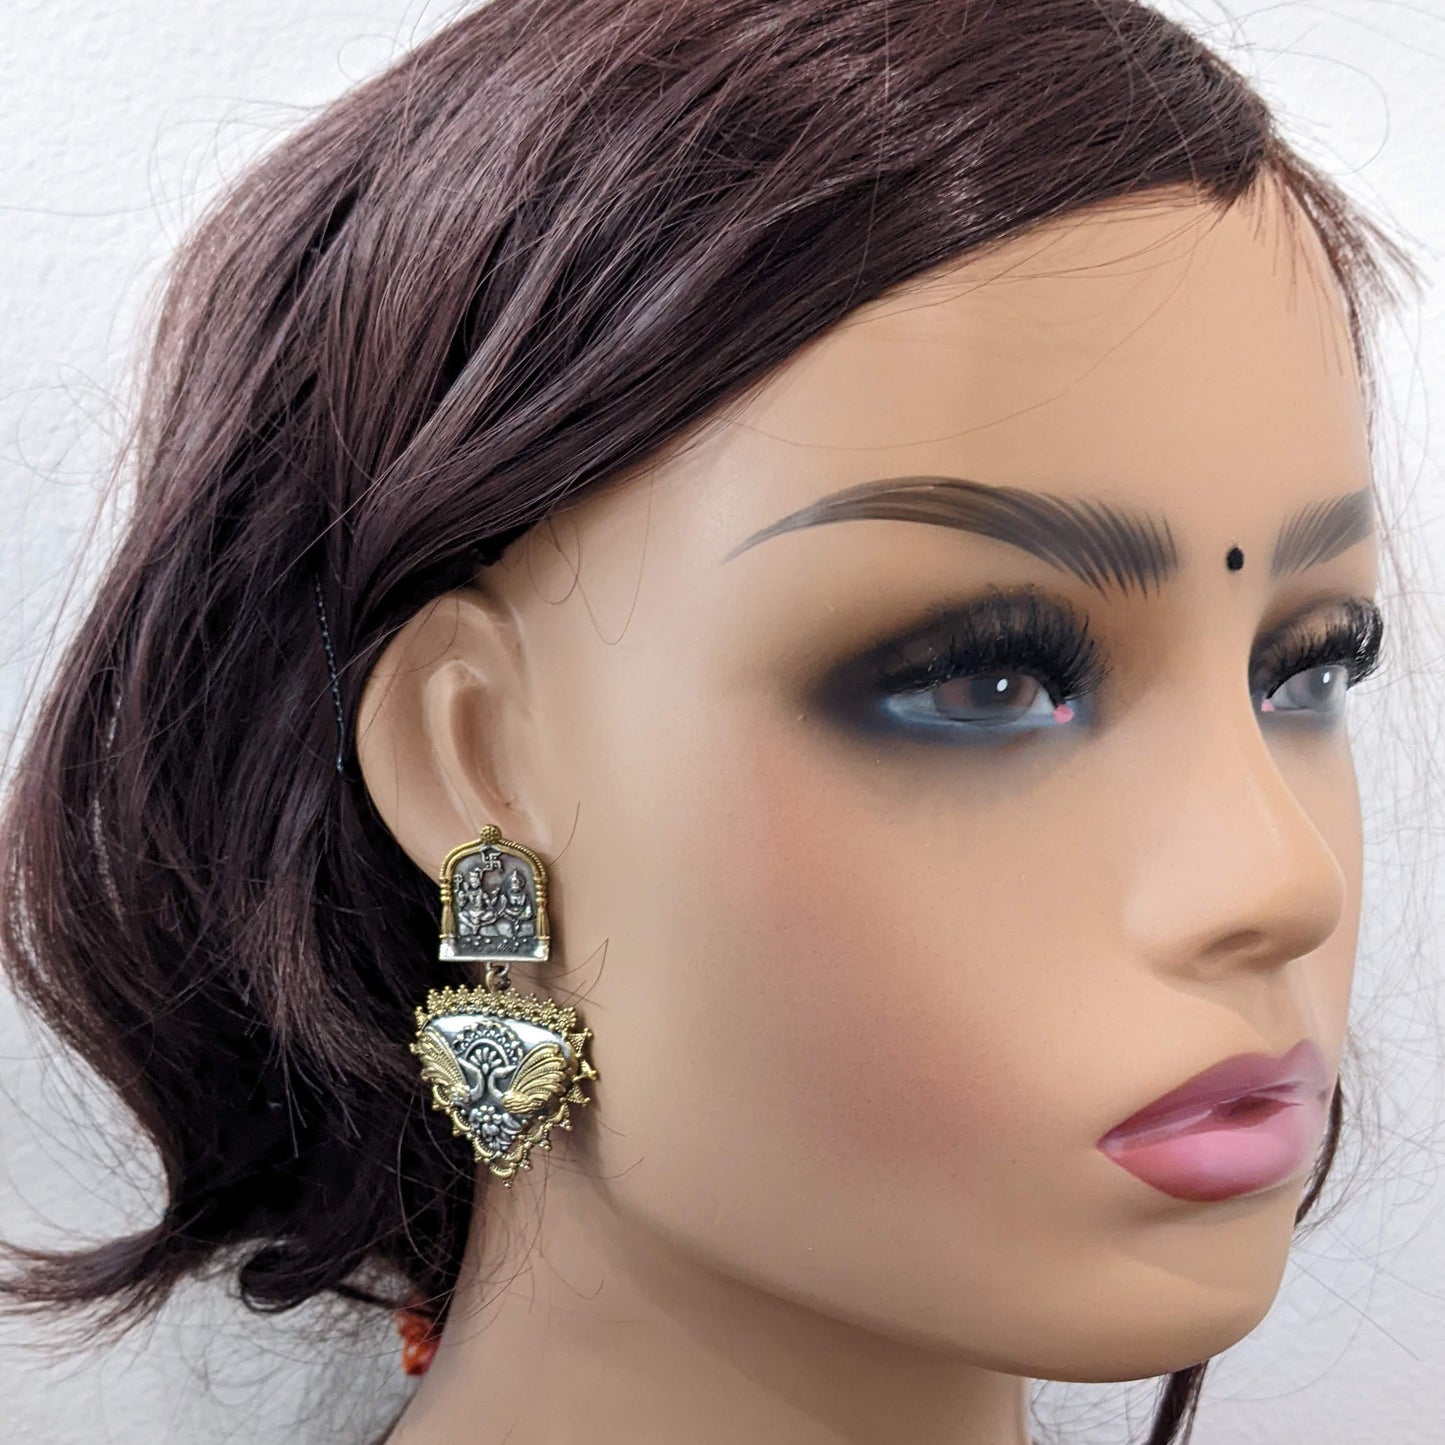 Dual tone oxidized silver Lord Siva Parvati earrings